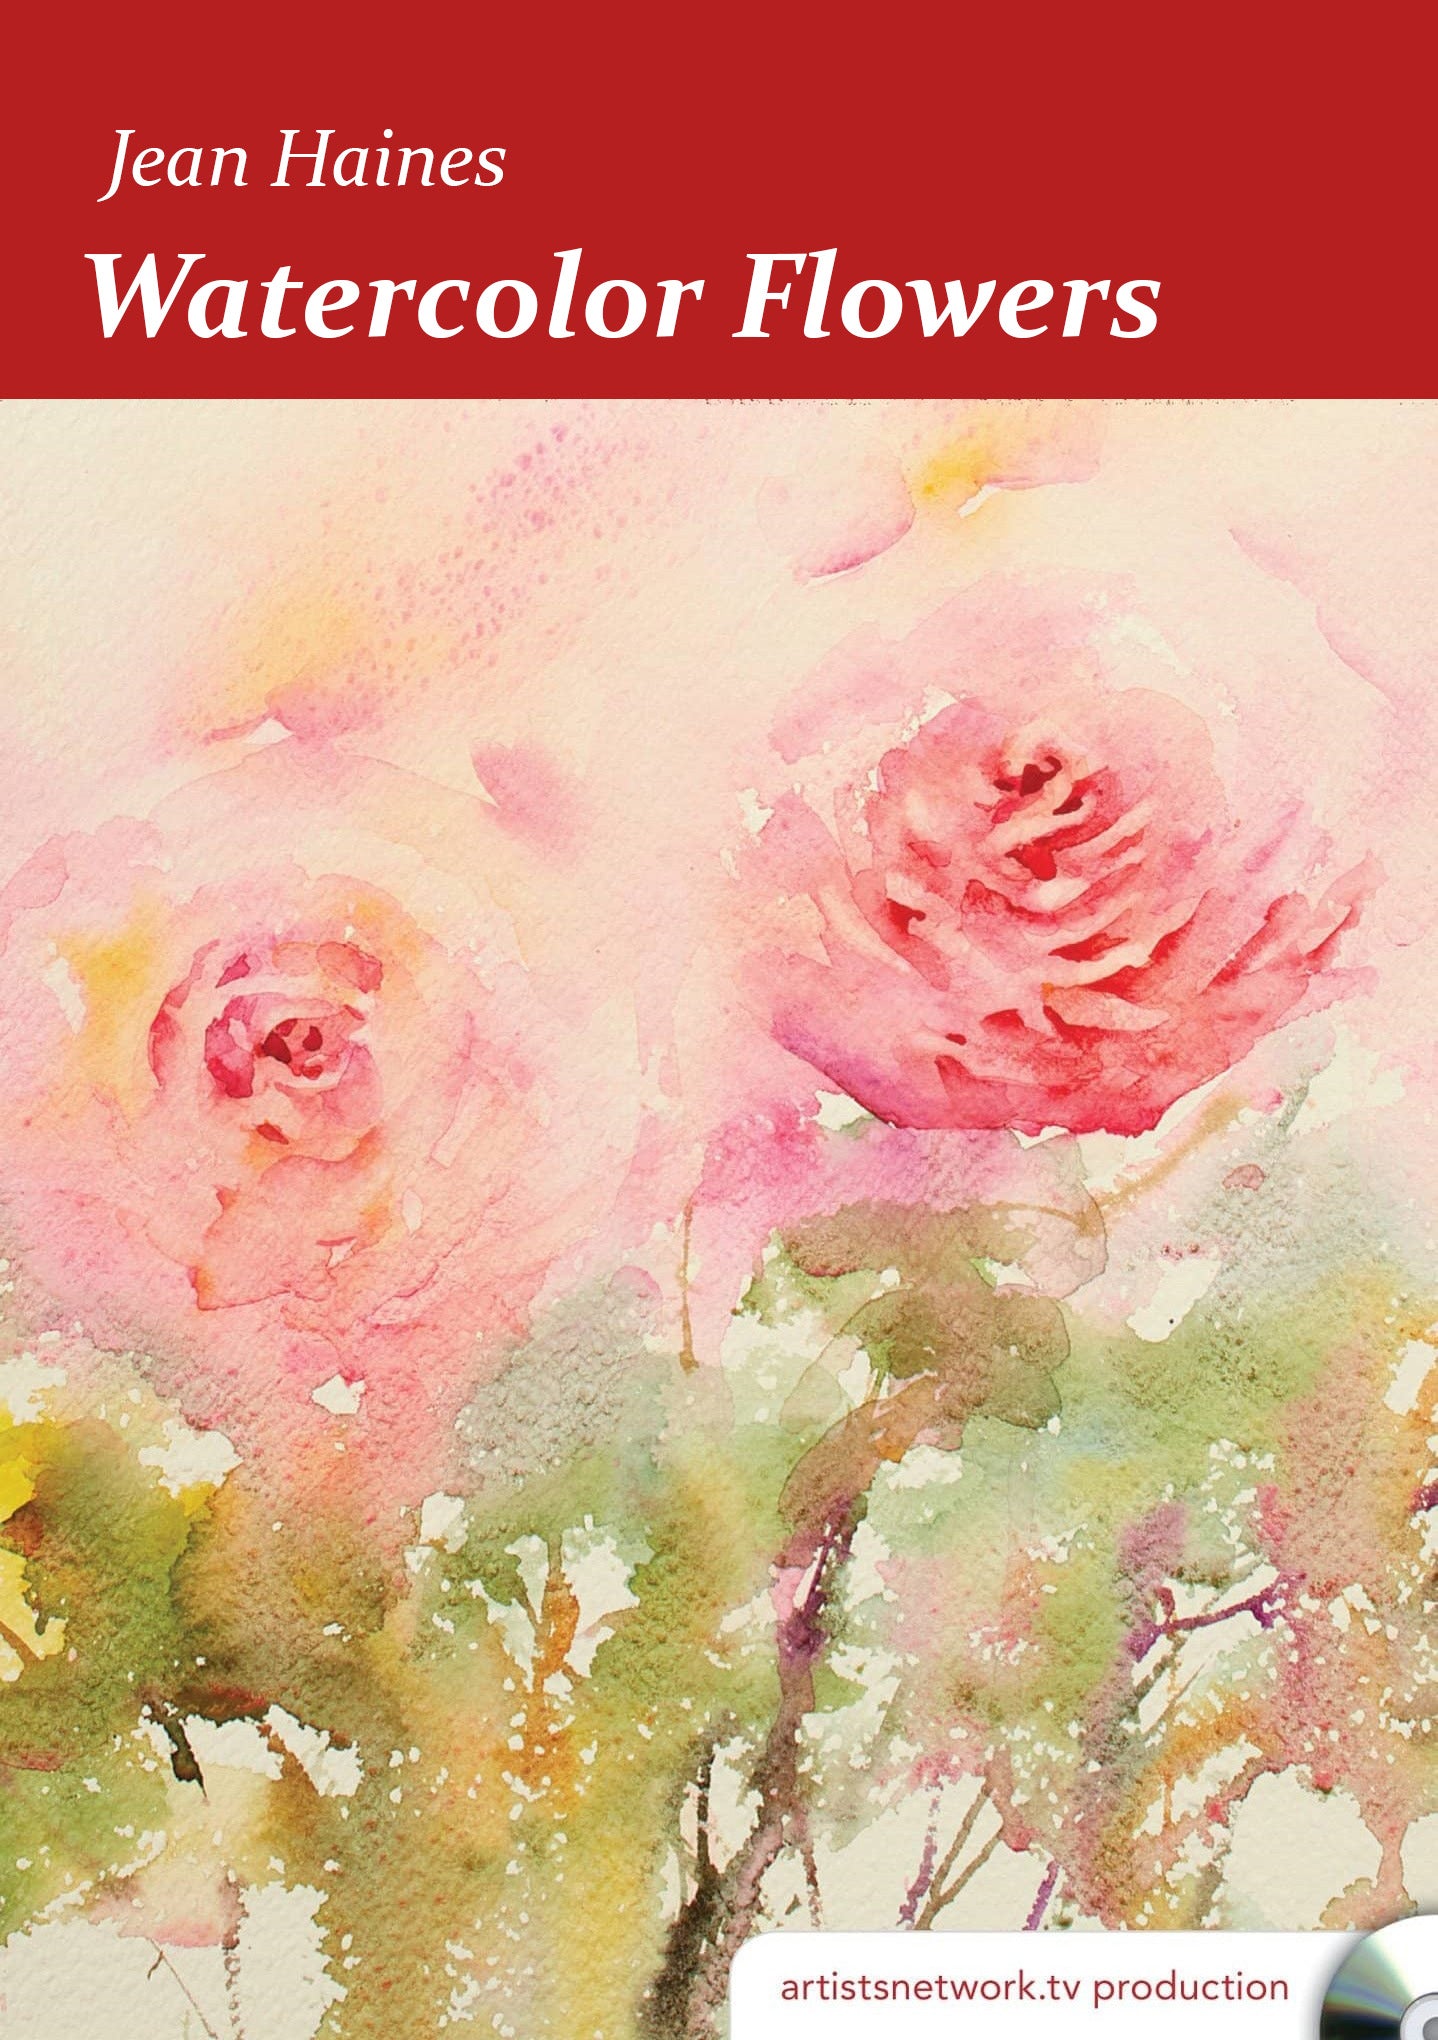 Jean Haines: Watercolor Flowers